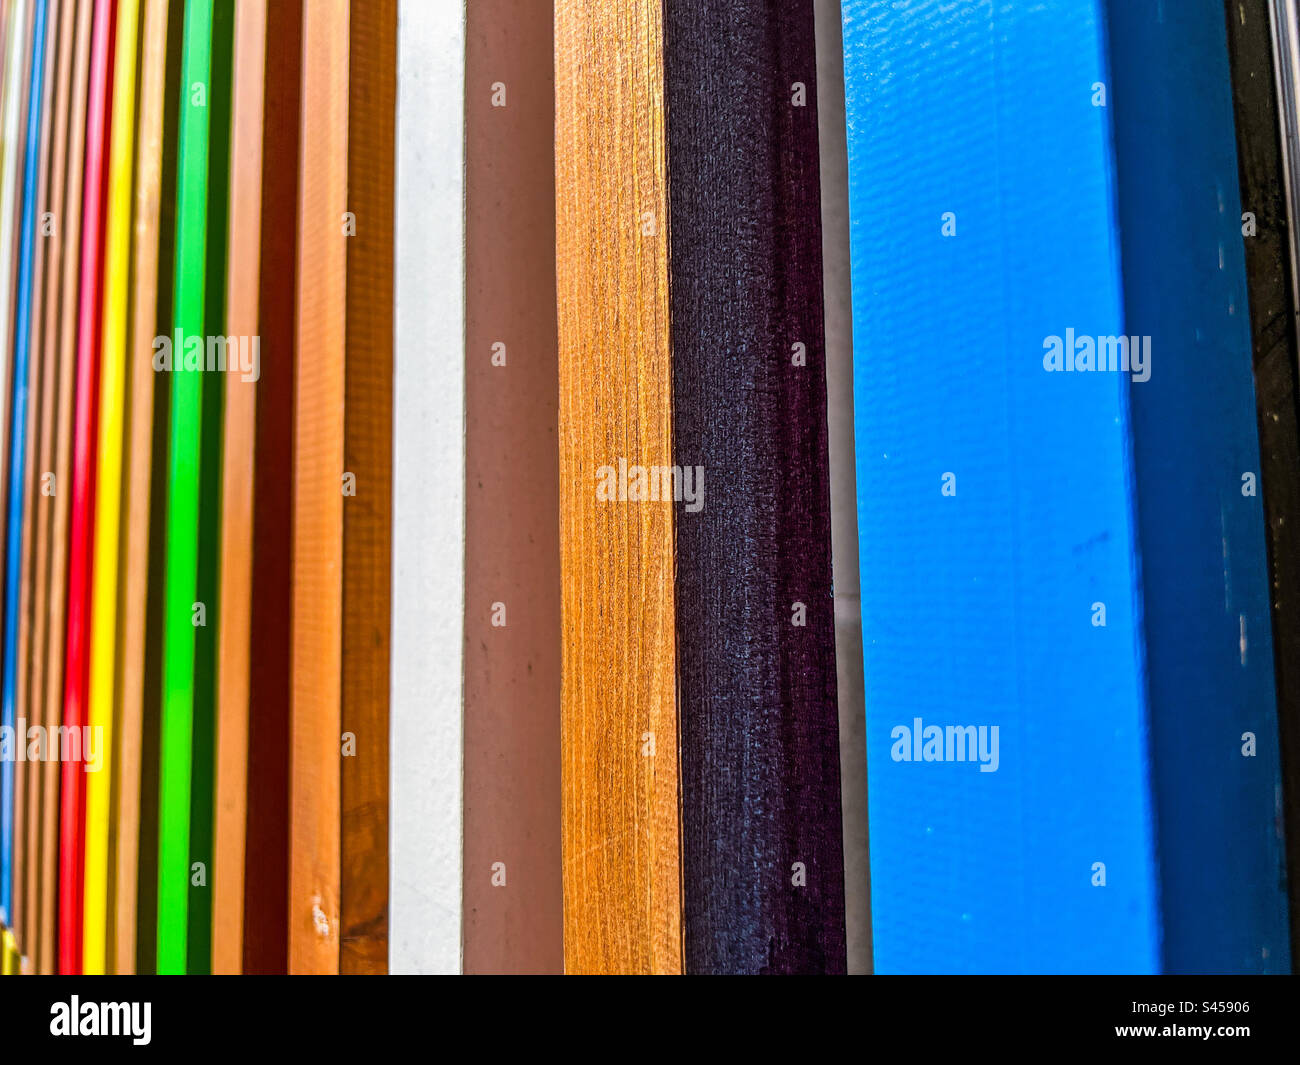 Farbenfrohe Holzverkleidung im Deal Track-Gebäude am Leeds Dock Stockfoto